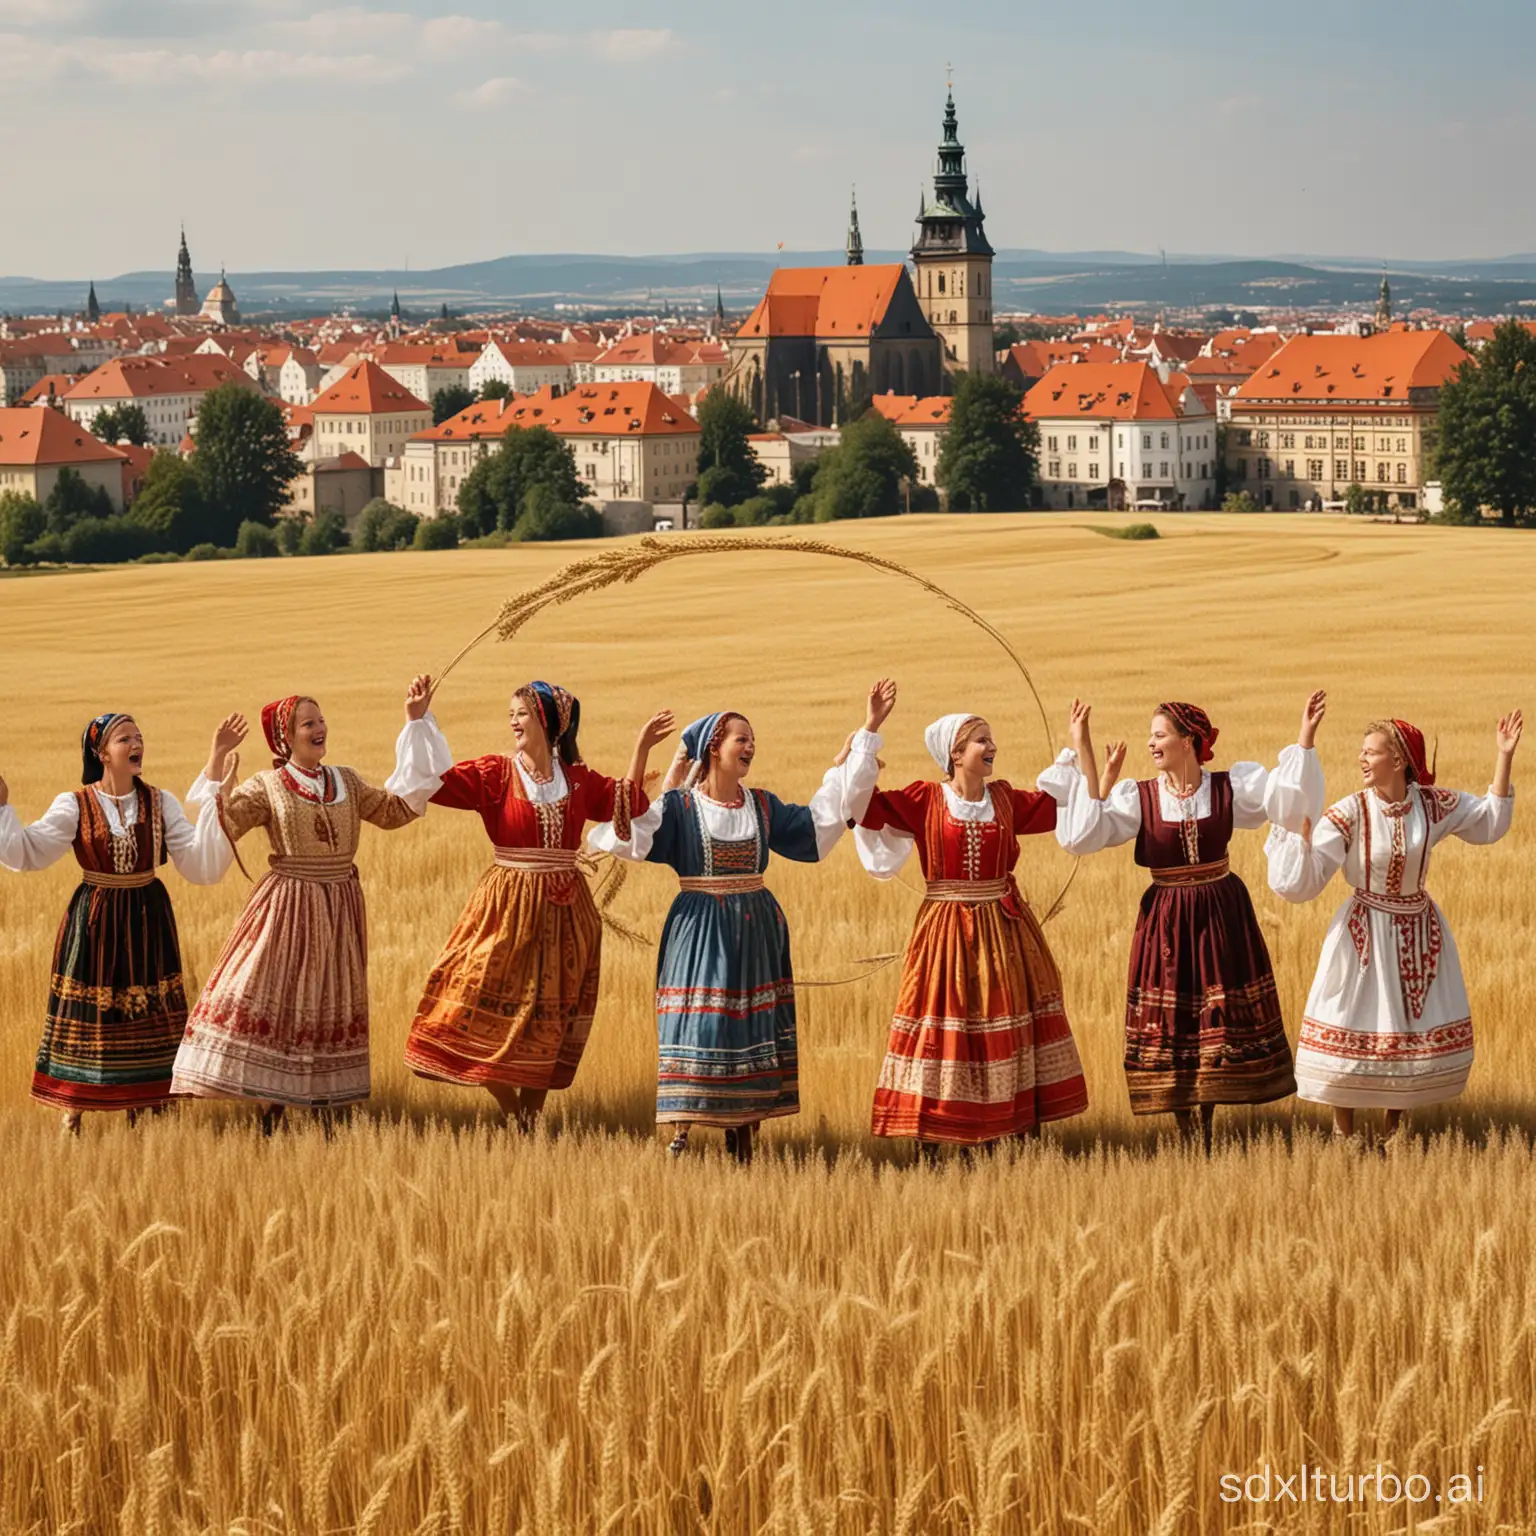 Czech-Harvest-Celebration-Folk-Singing-and-Dancing-in-Wheat-Field